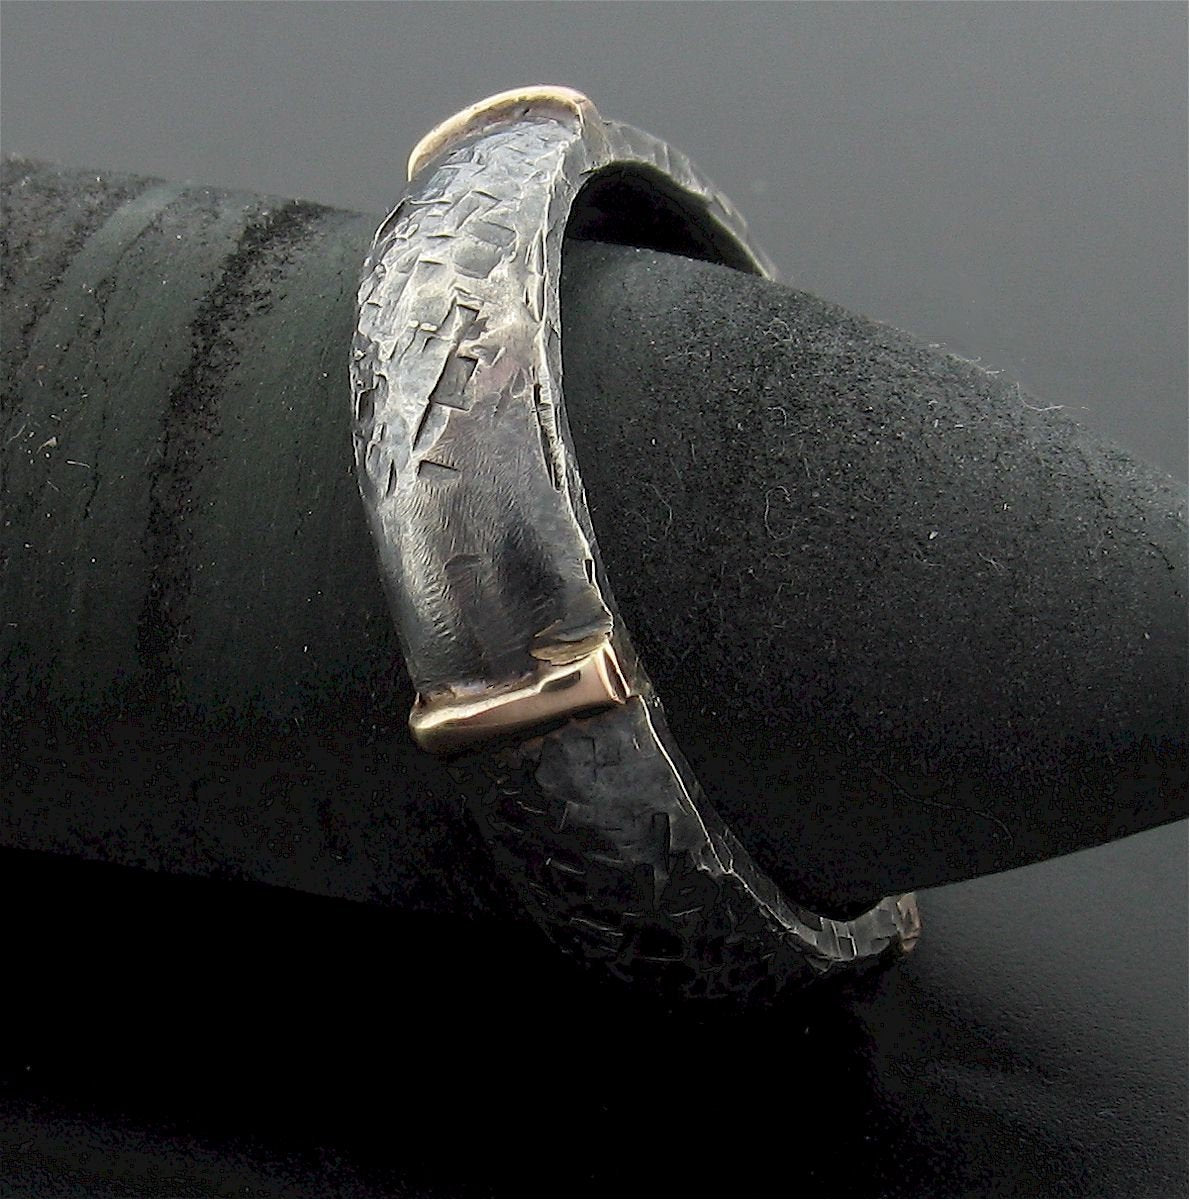 Mens black silver & rose gold wedding ring Lakeland Mine design. - Cumbrian Designs